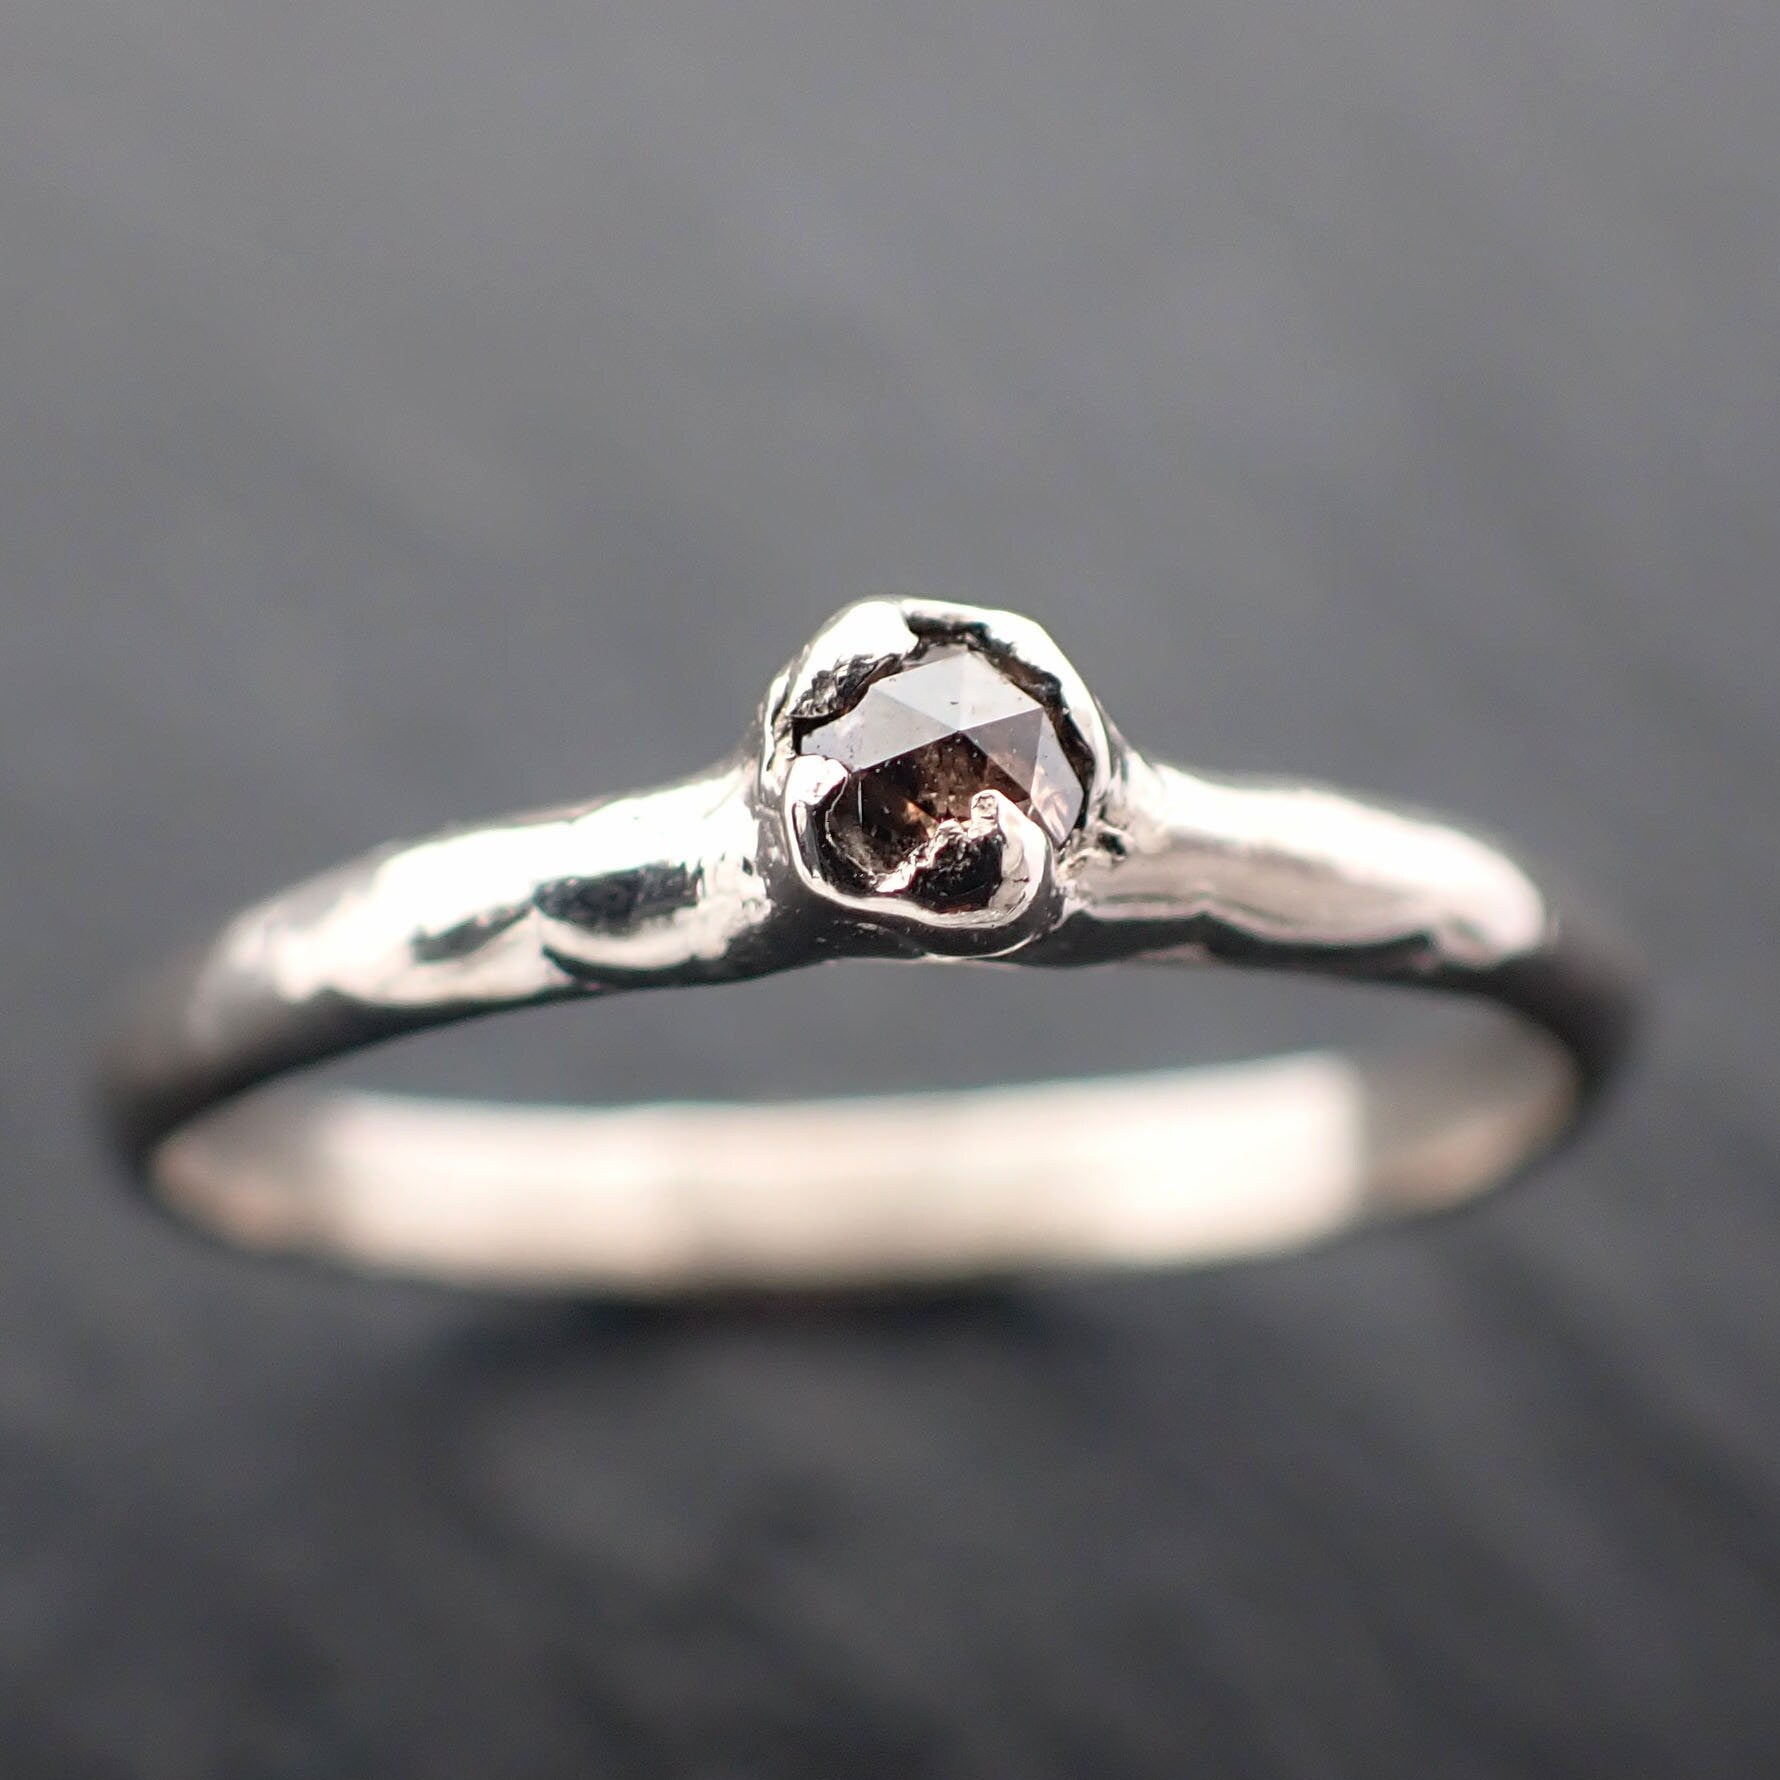 Faceted Fancy cut Cognac Diamond Solitaire Engagement 14k White Gold Wedding Ring byAngeline 3515